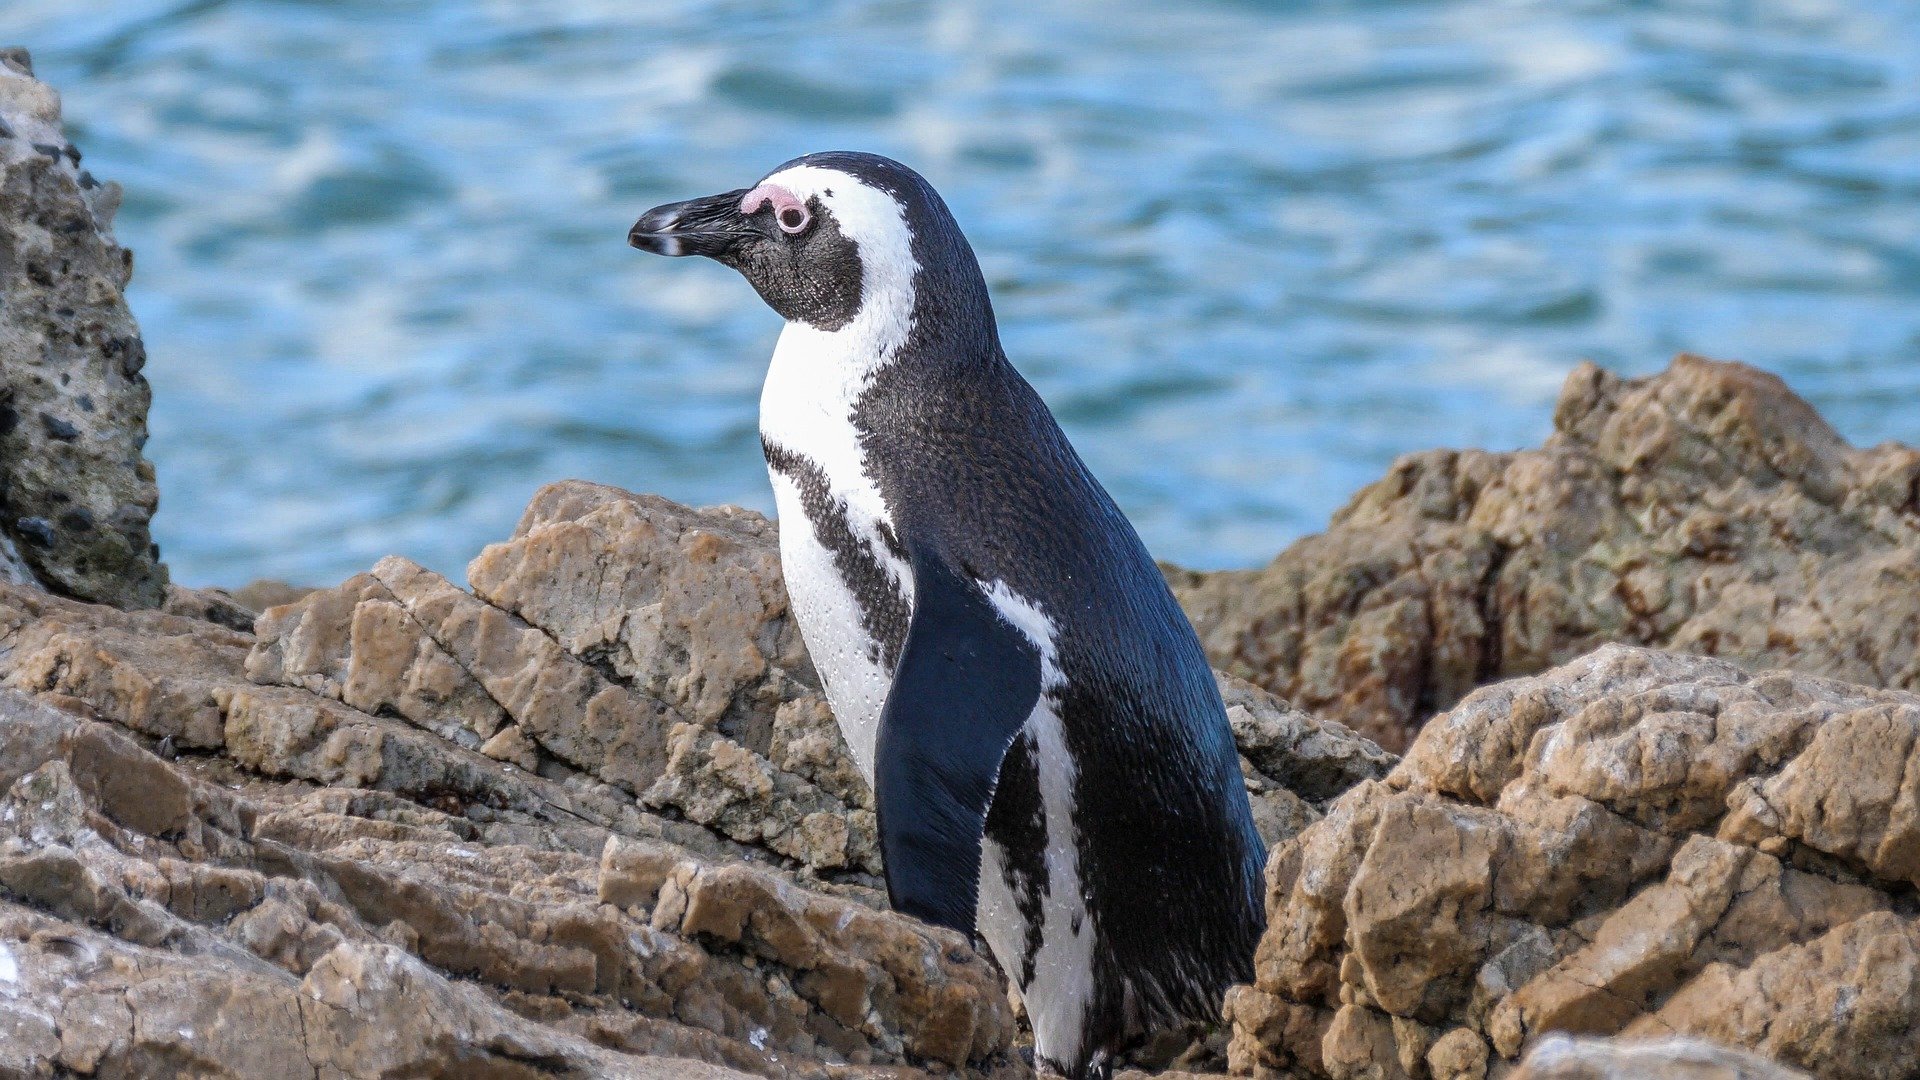 Phillip Island, where little penguins come on shore